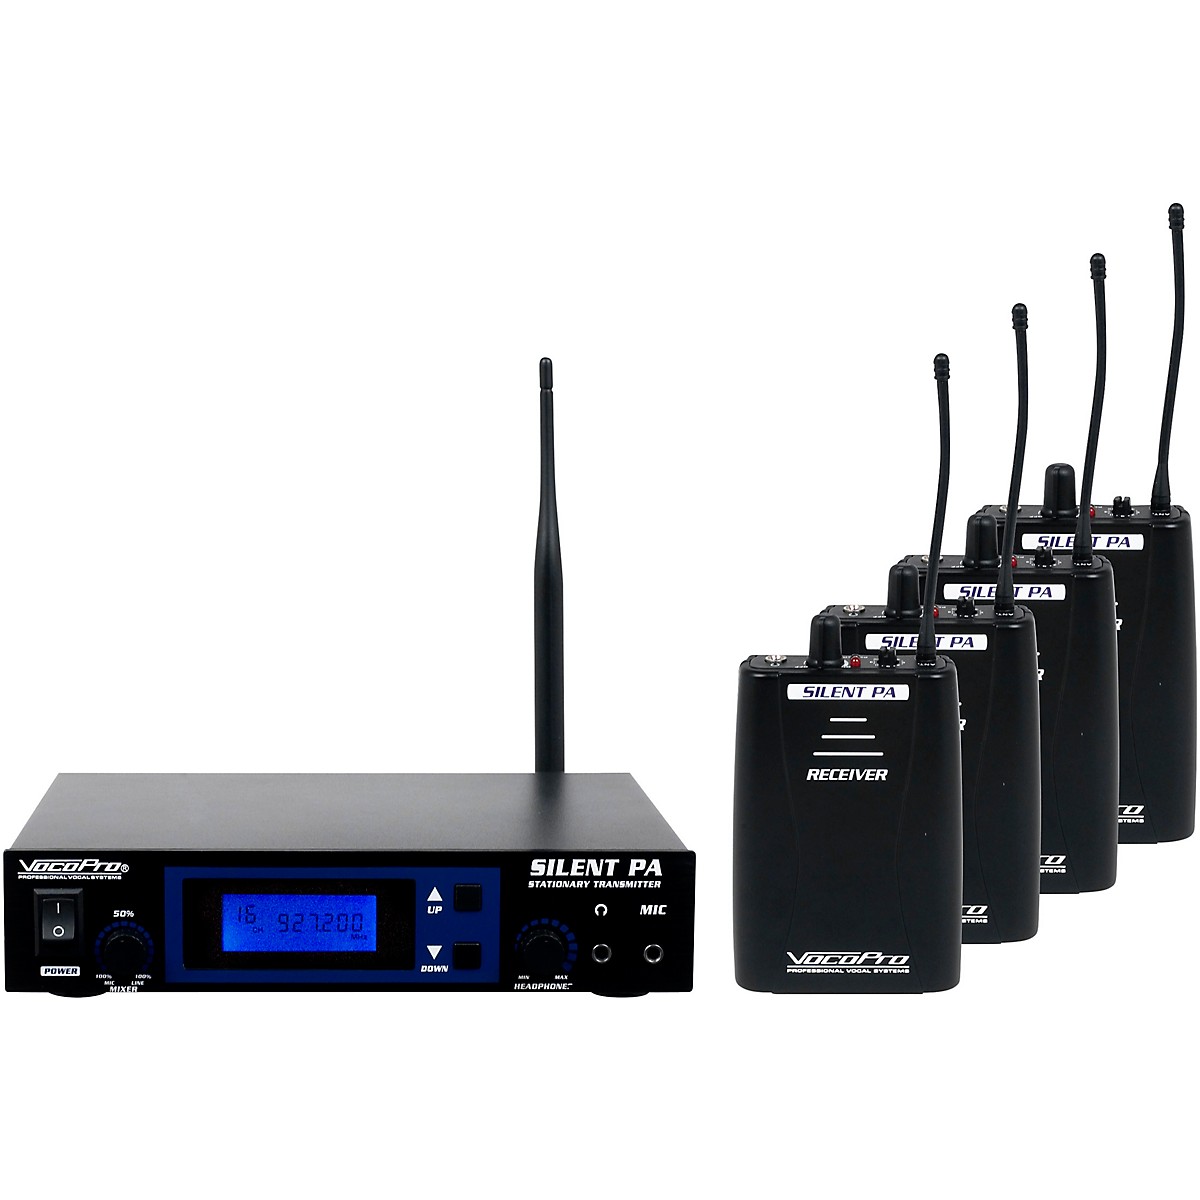 Denon Professional Professional Grade Audio Video Recording Playback And Signal Distribution